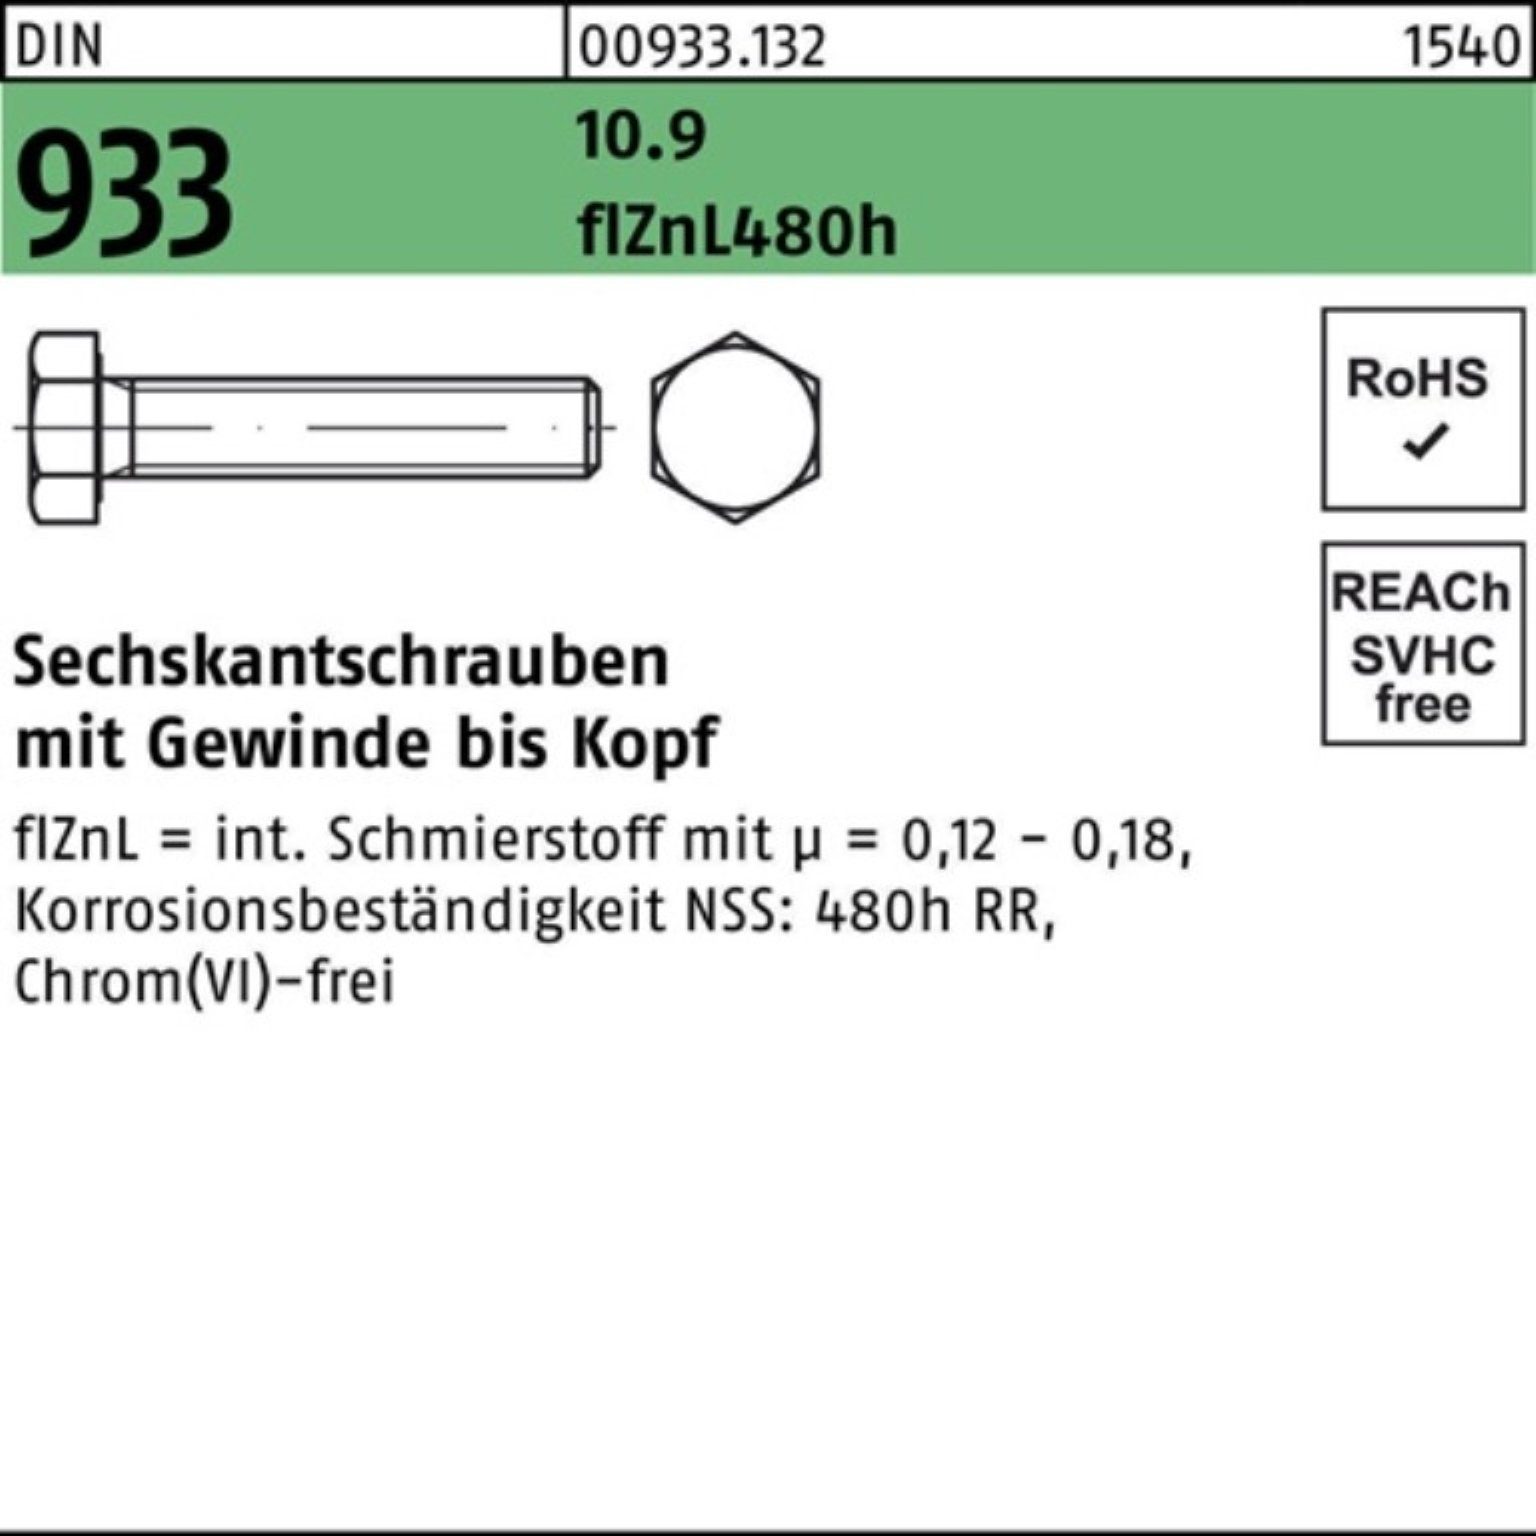 Reyher Sechskantschraube 100er Pack Sechskantschraube DIN 933 VG M24x 55 10.9 flZnL/nc/x/x/480h